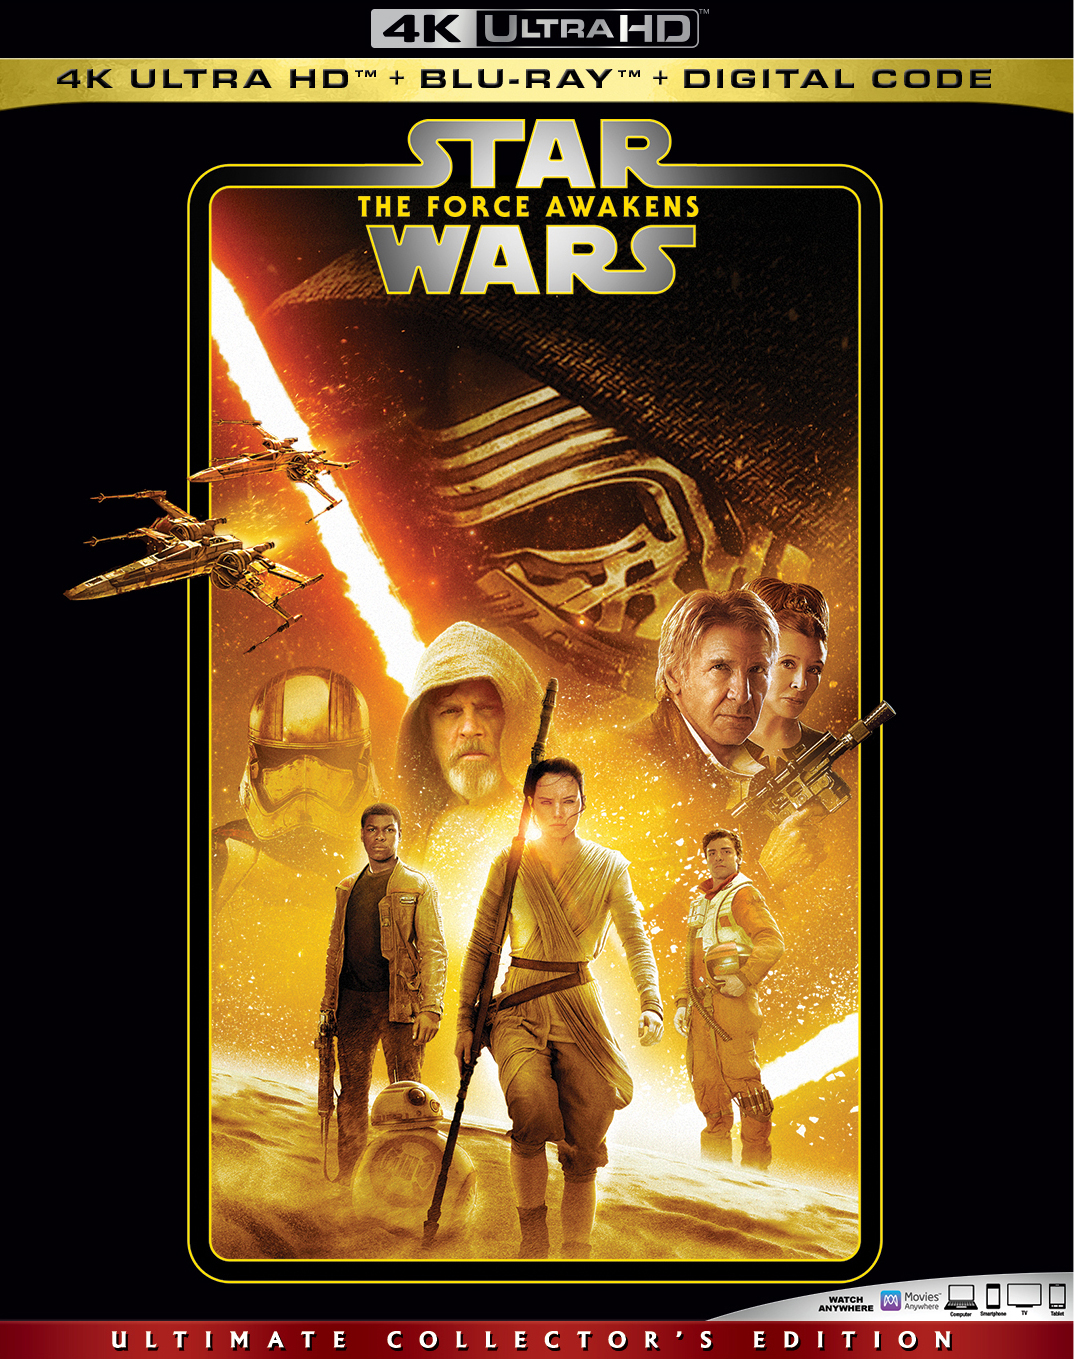 Star Wars: The Force Awakens [Includes Digital Copy] [4K Ultra HD Blu-ray/Blu-ray] [2015]